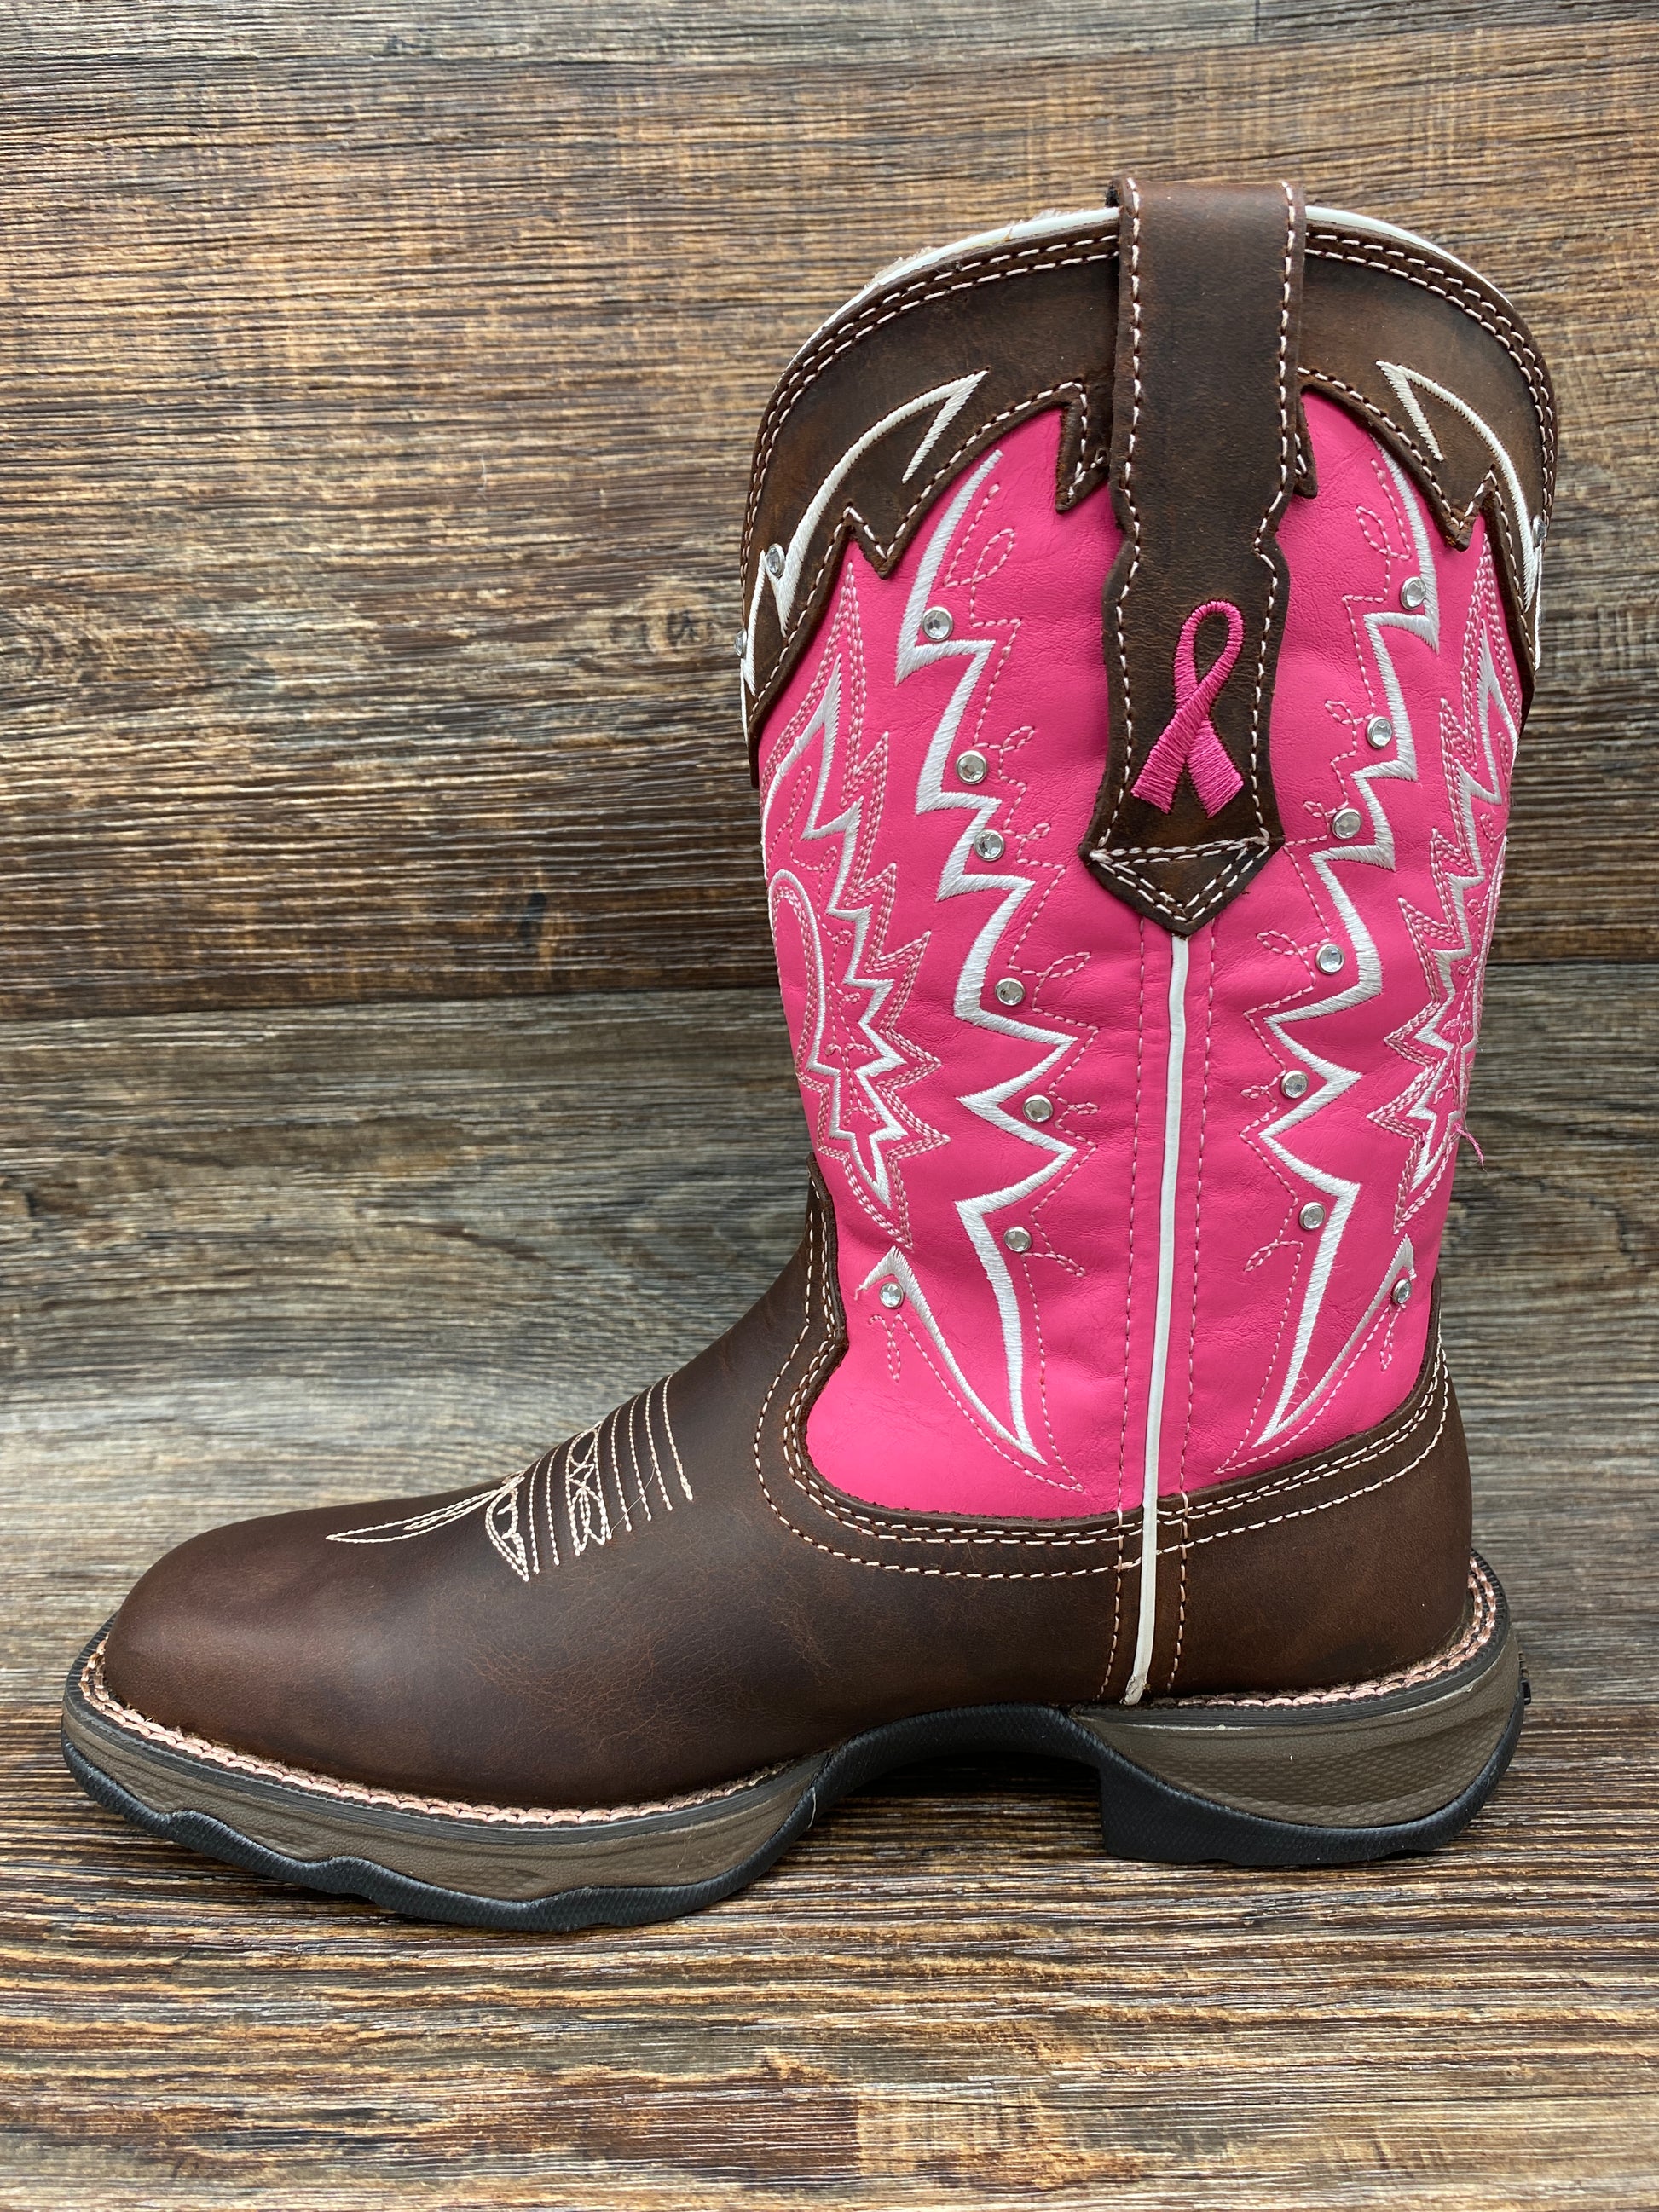 Durango BT287 Boot - Tan/Pink, 3